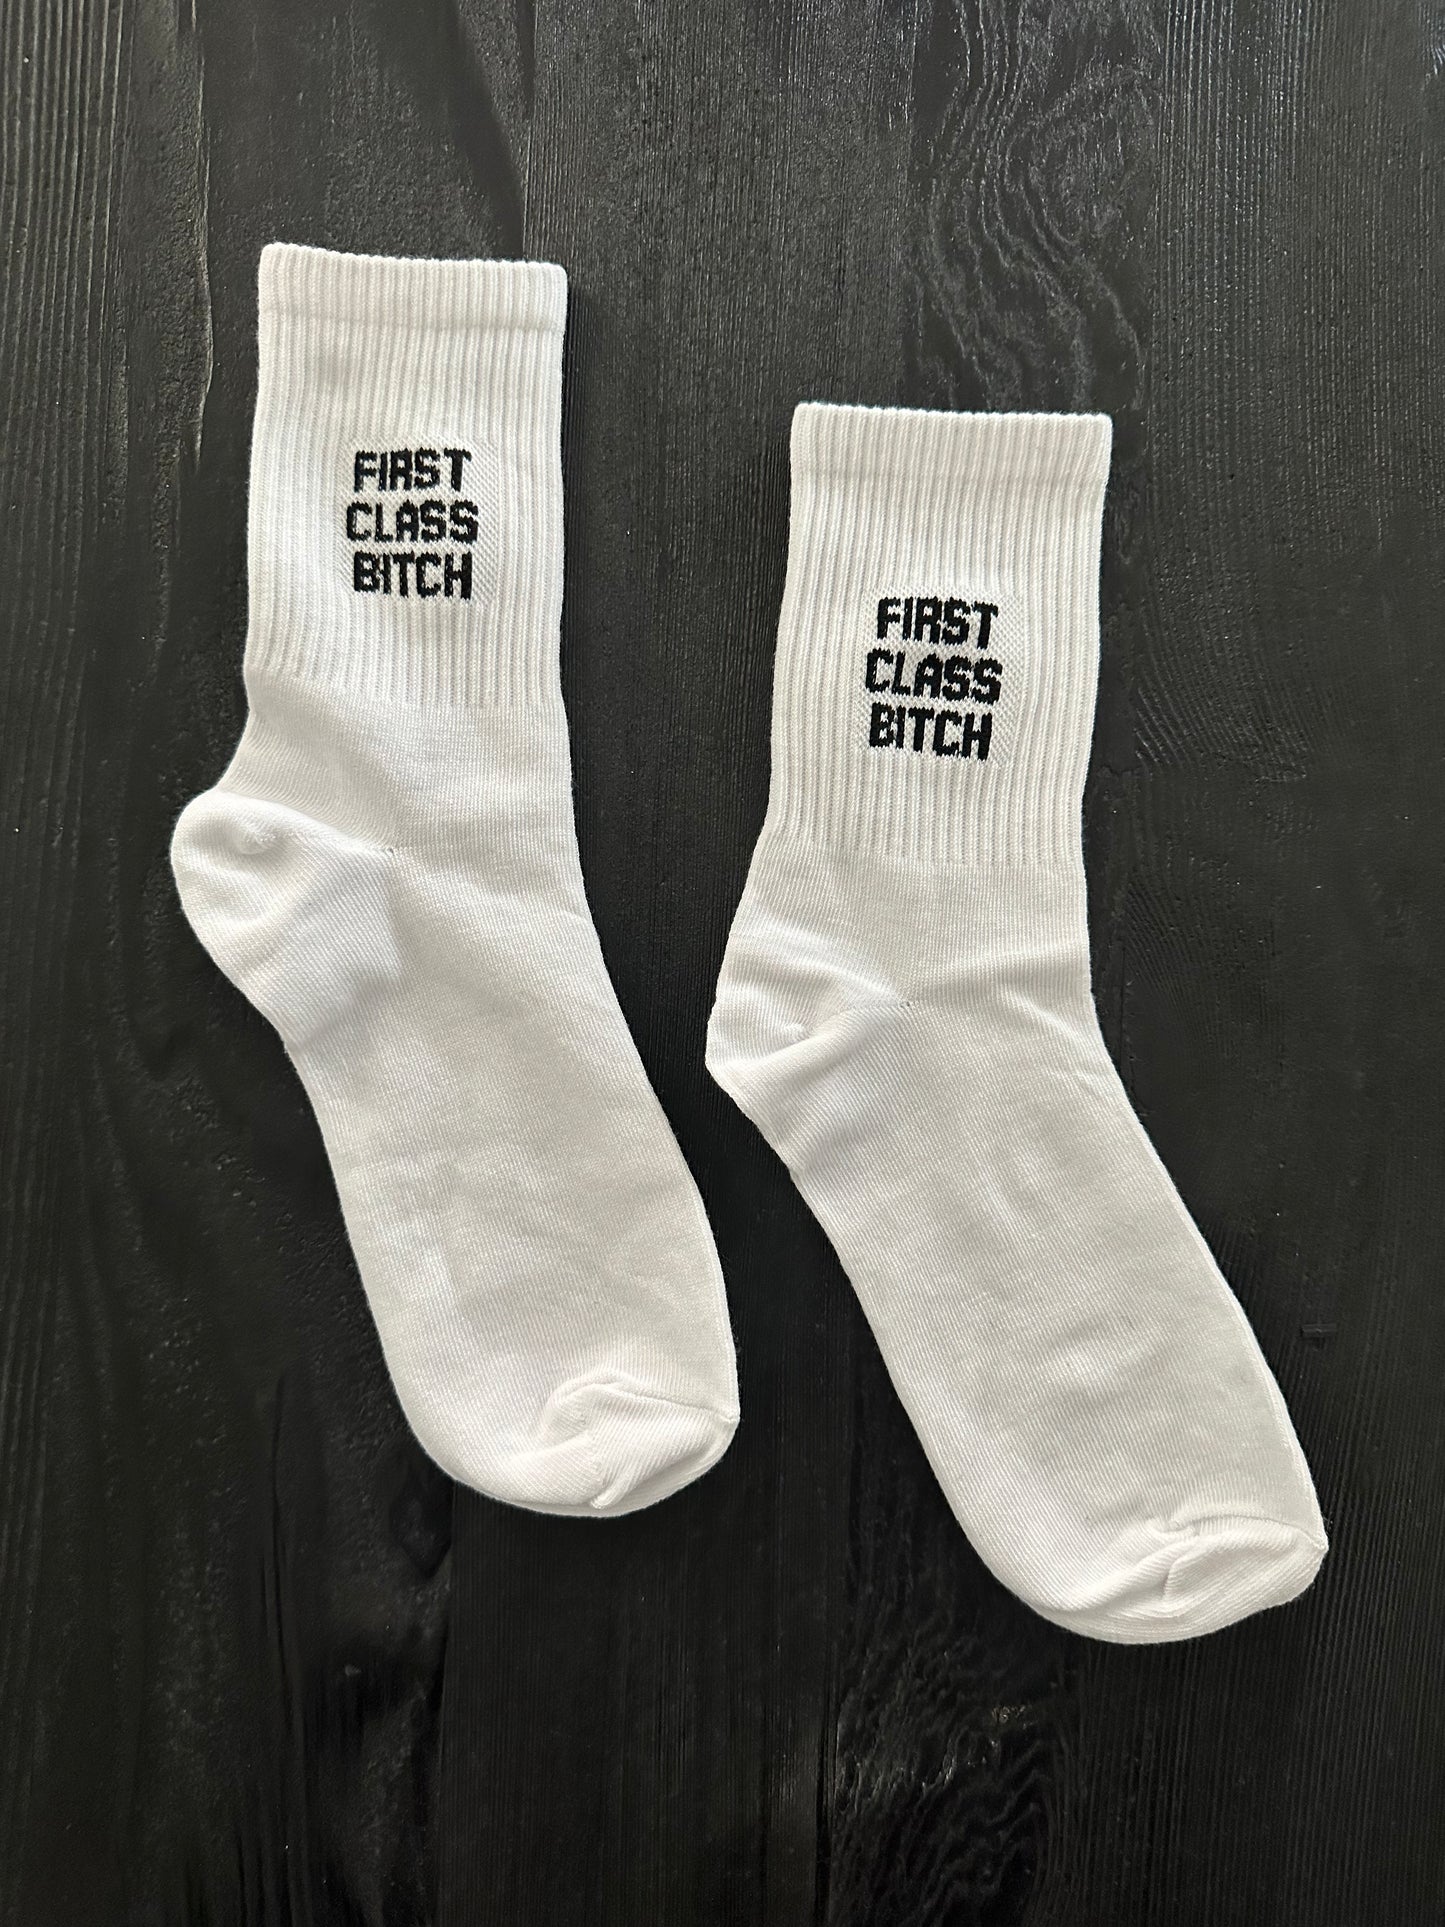 First Class Bitch Socks